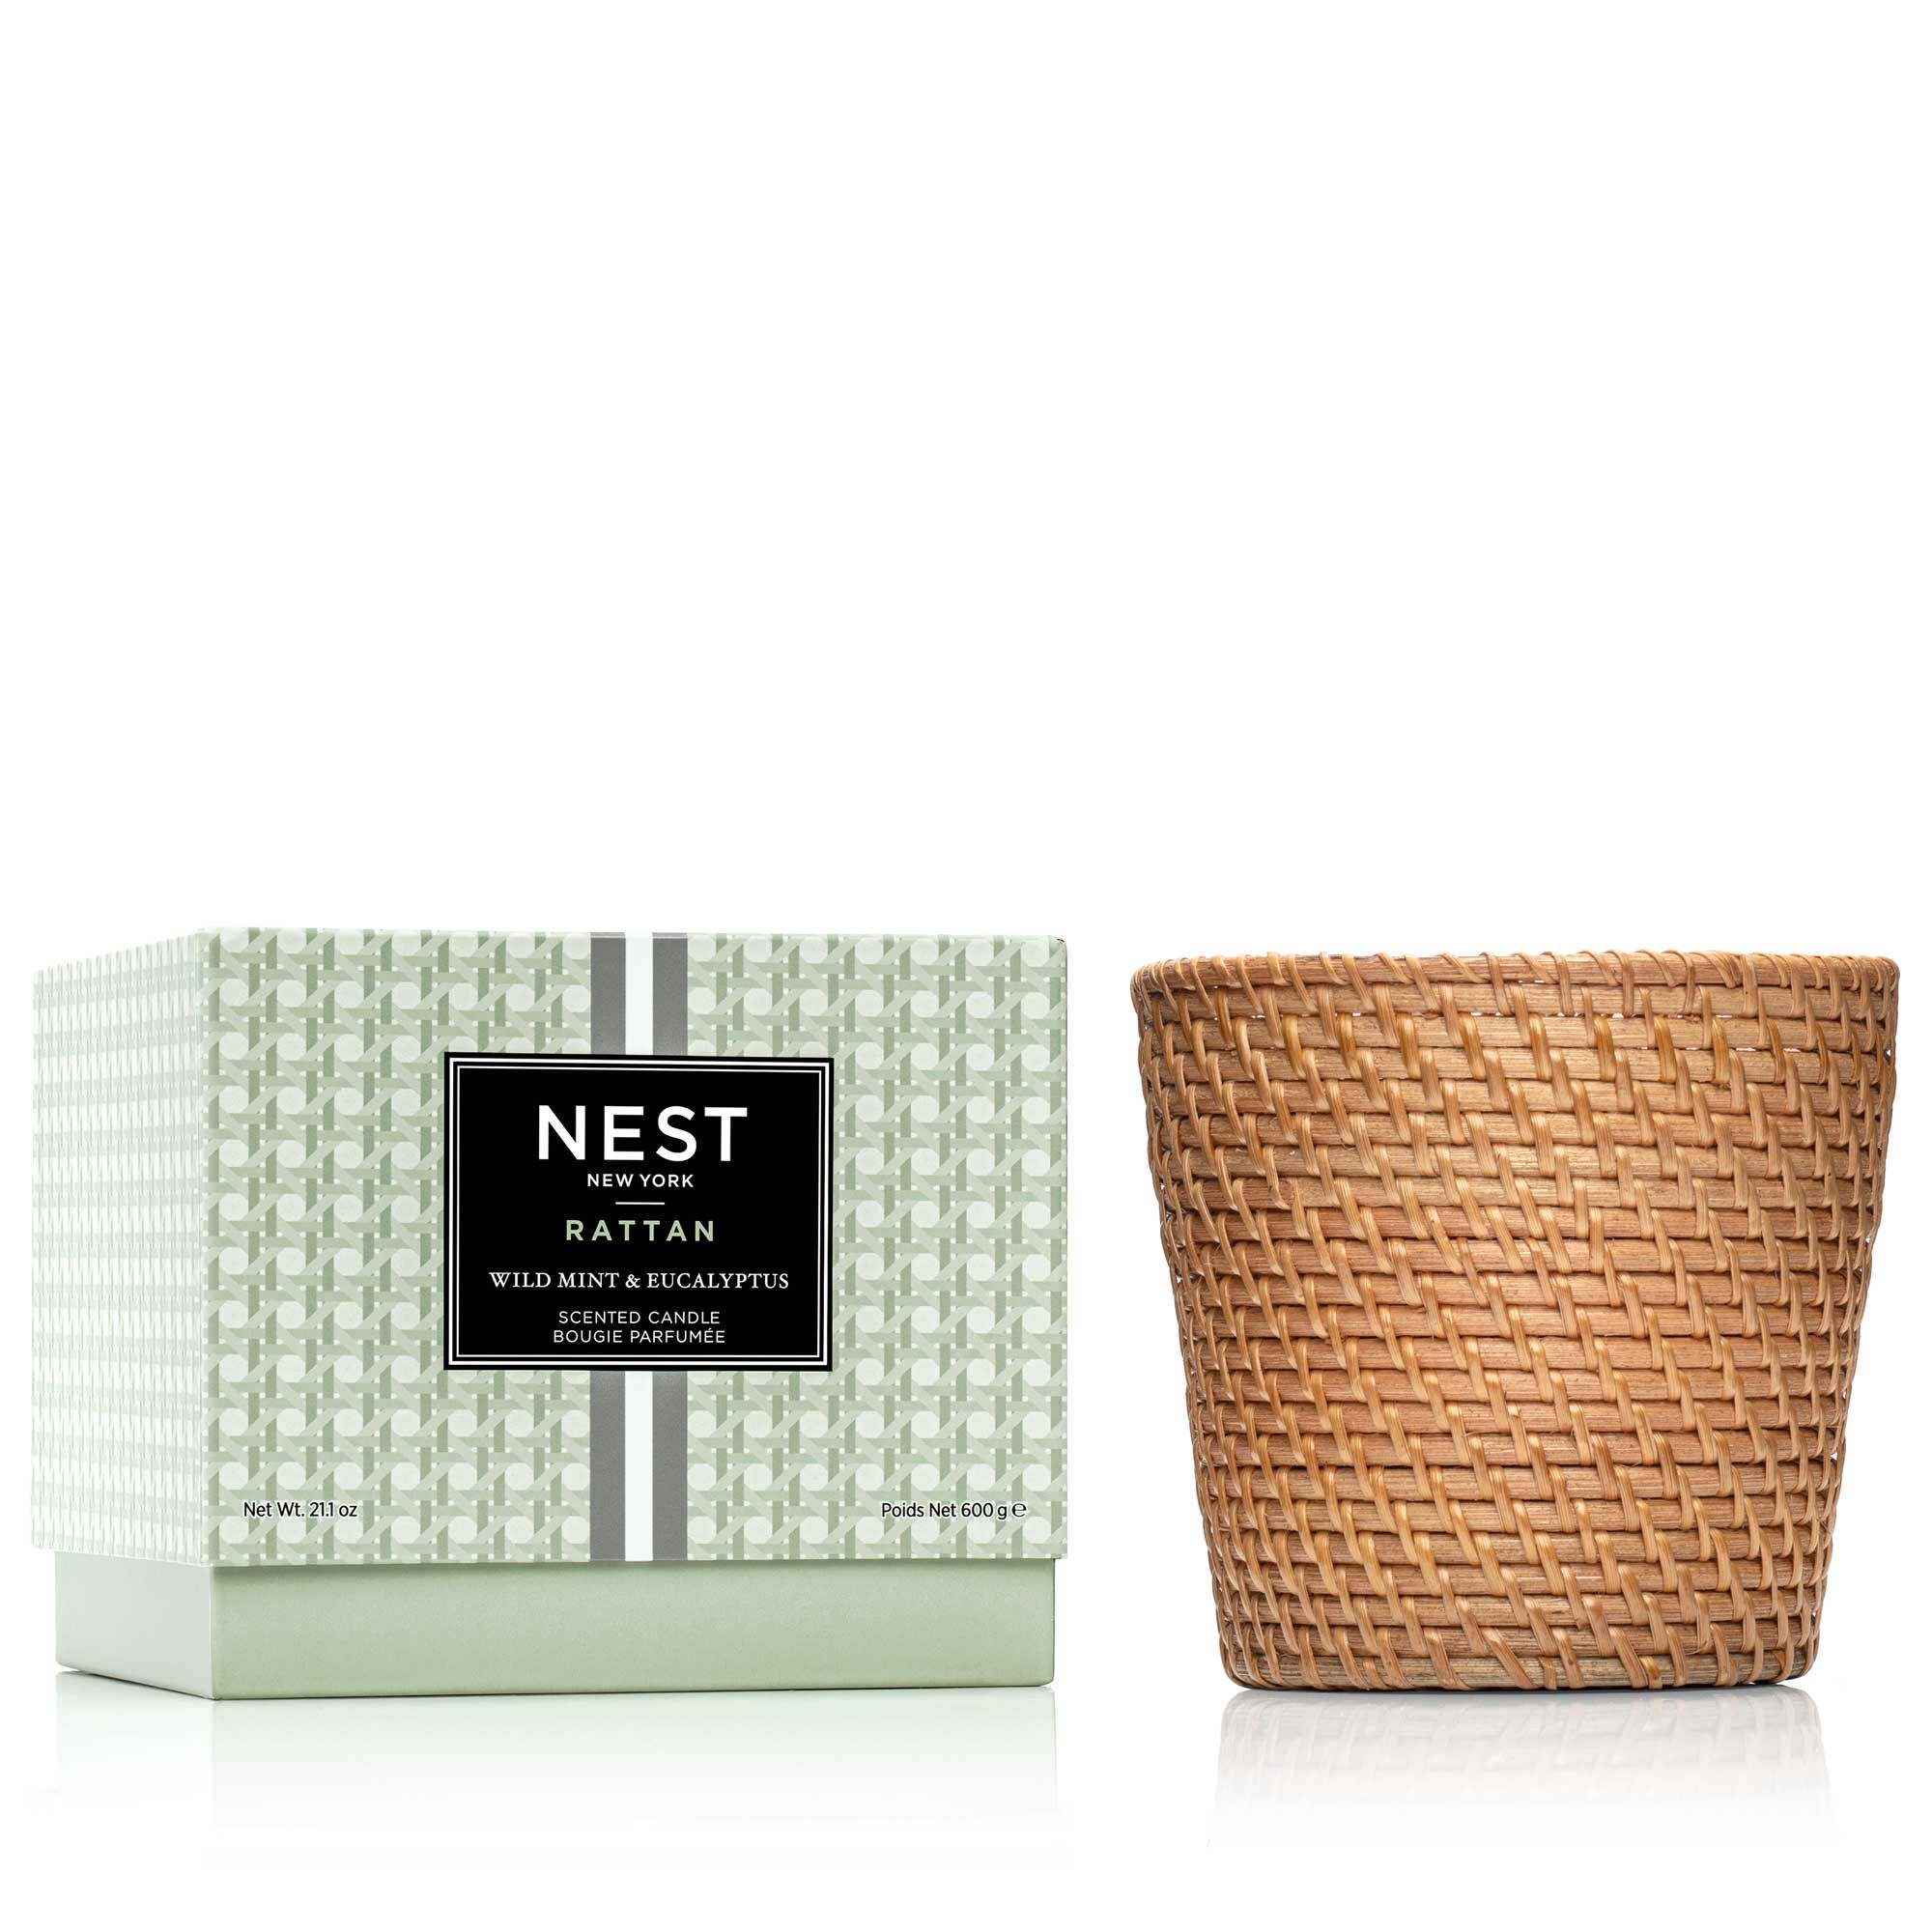 Rattan Wild Mint & Eucalyptus 3-Wick Candle | NEST Fragrances